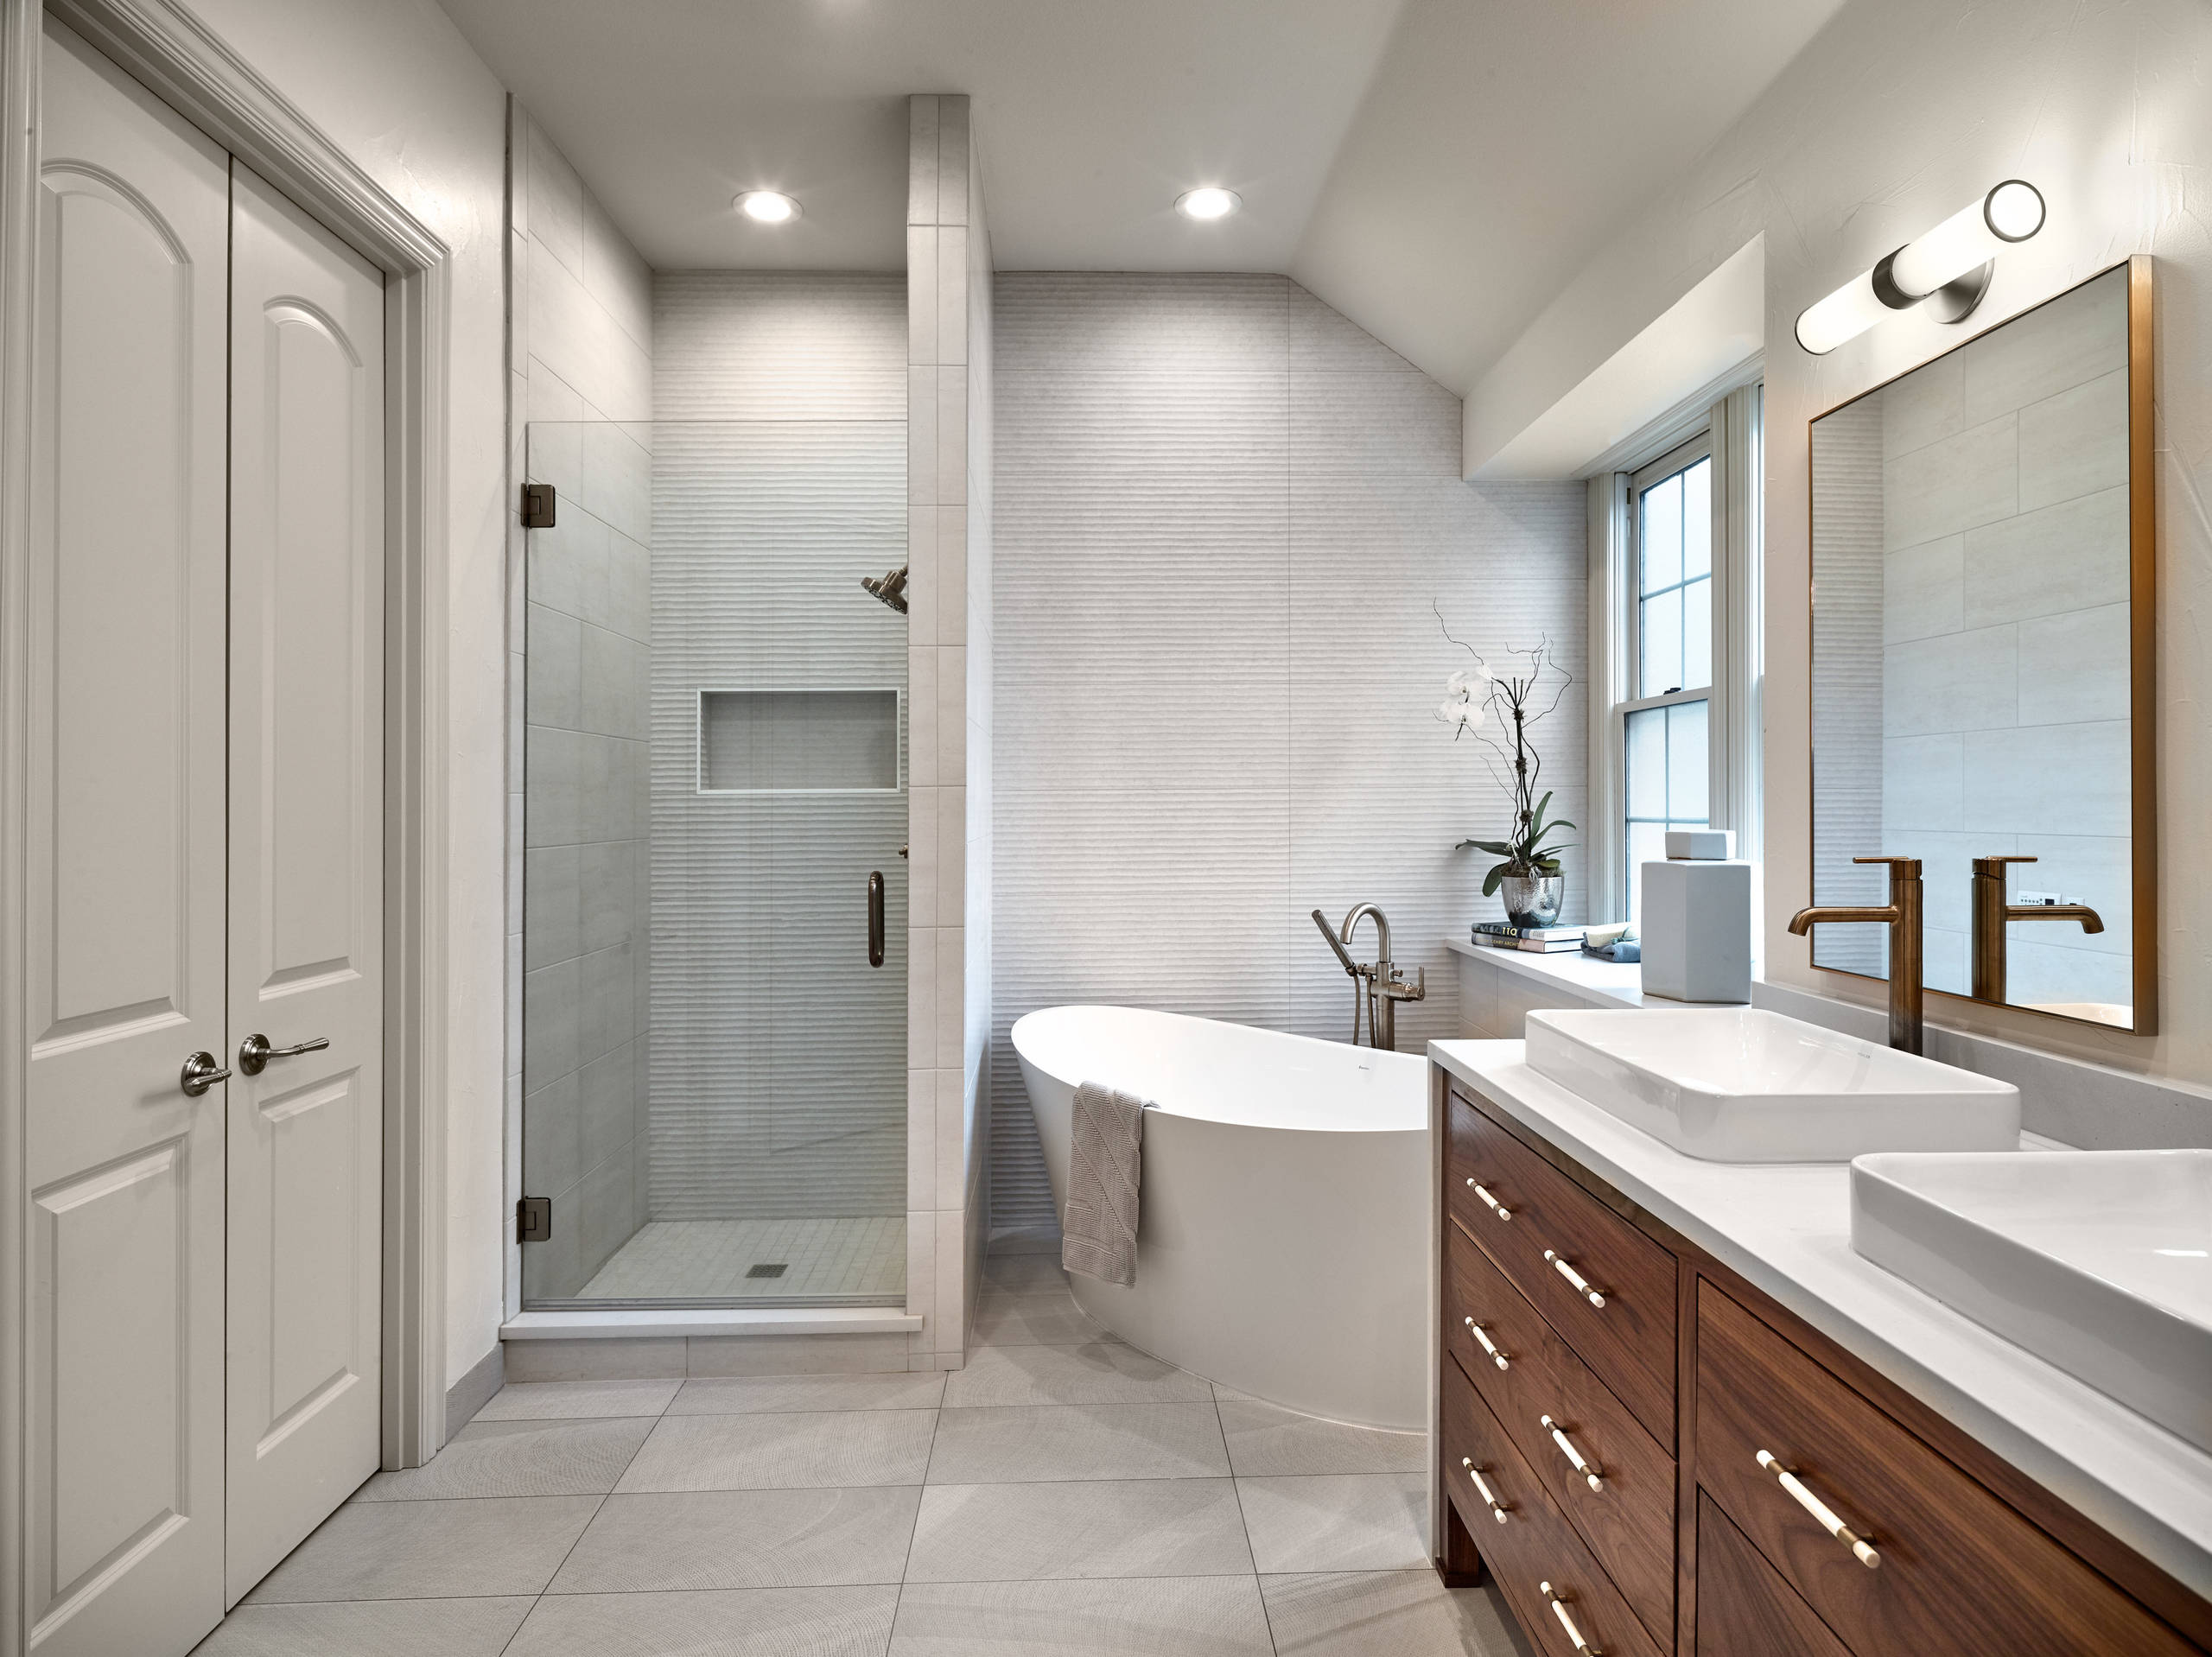 7 Modern Luxury Bathroom Ideas That Will Inspire You